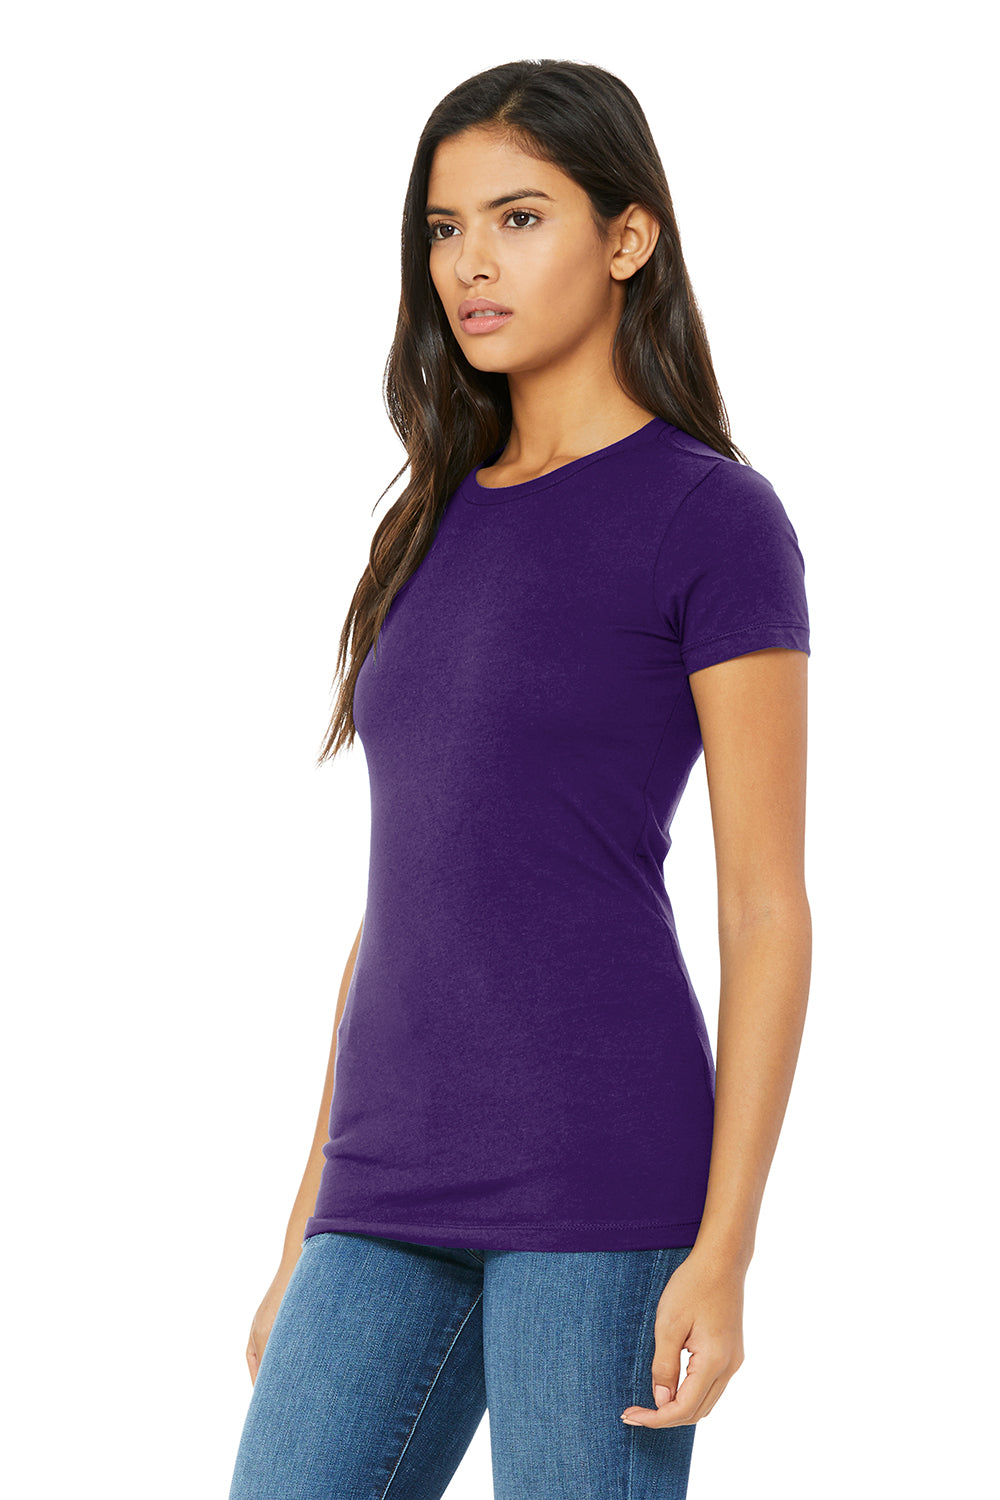 Bella + Canvas BC6004/6004 Womens The Favorite Short Sleeve Crewneck T-Shirt Team Purple Model 3Q